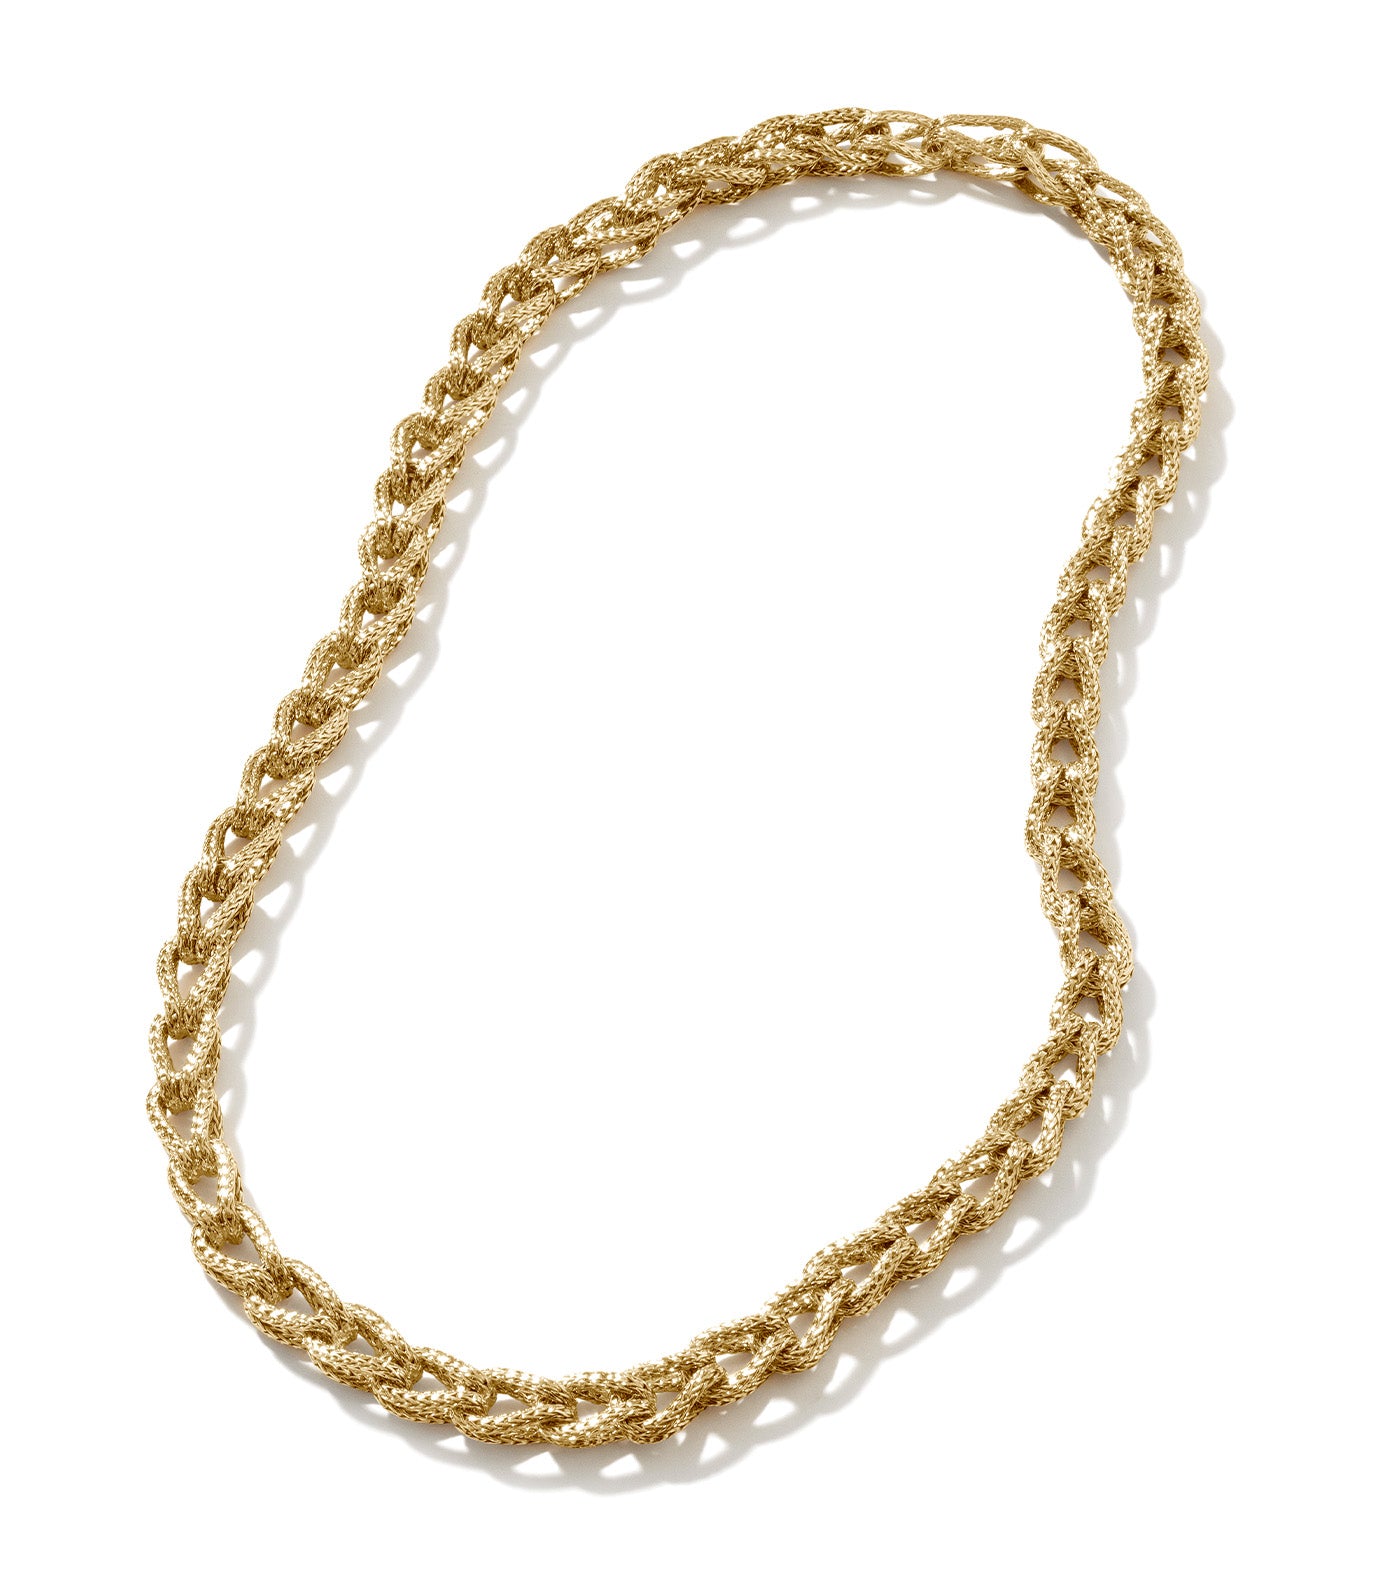 John Hardy Asli Link 7mm Chain Necklace 18k Yellow Gold